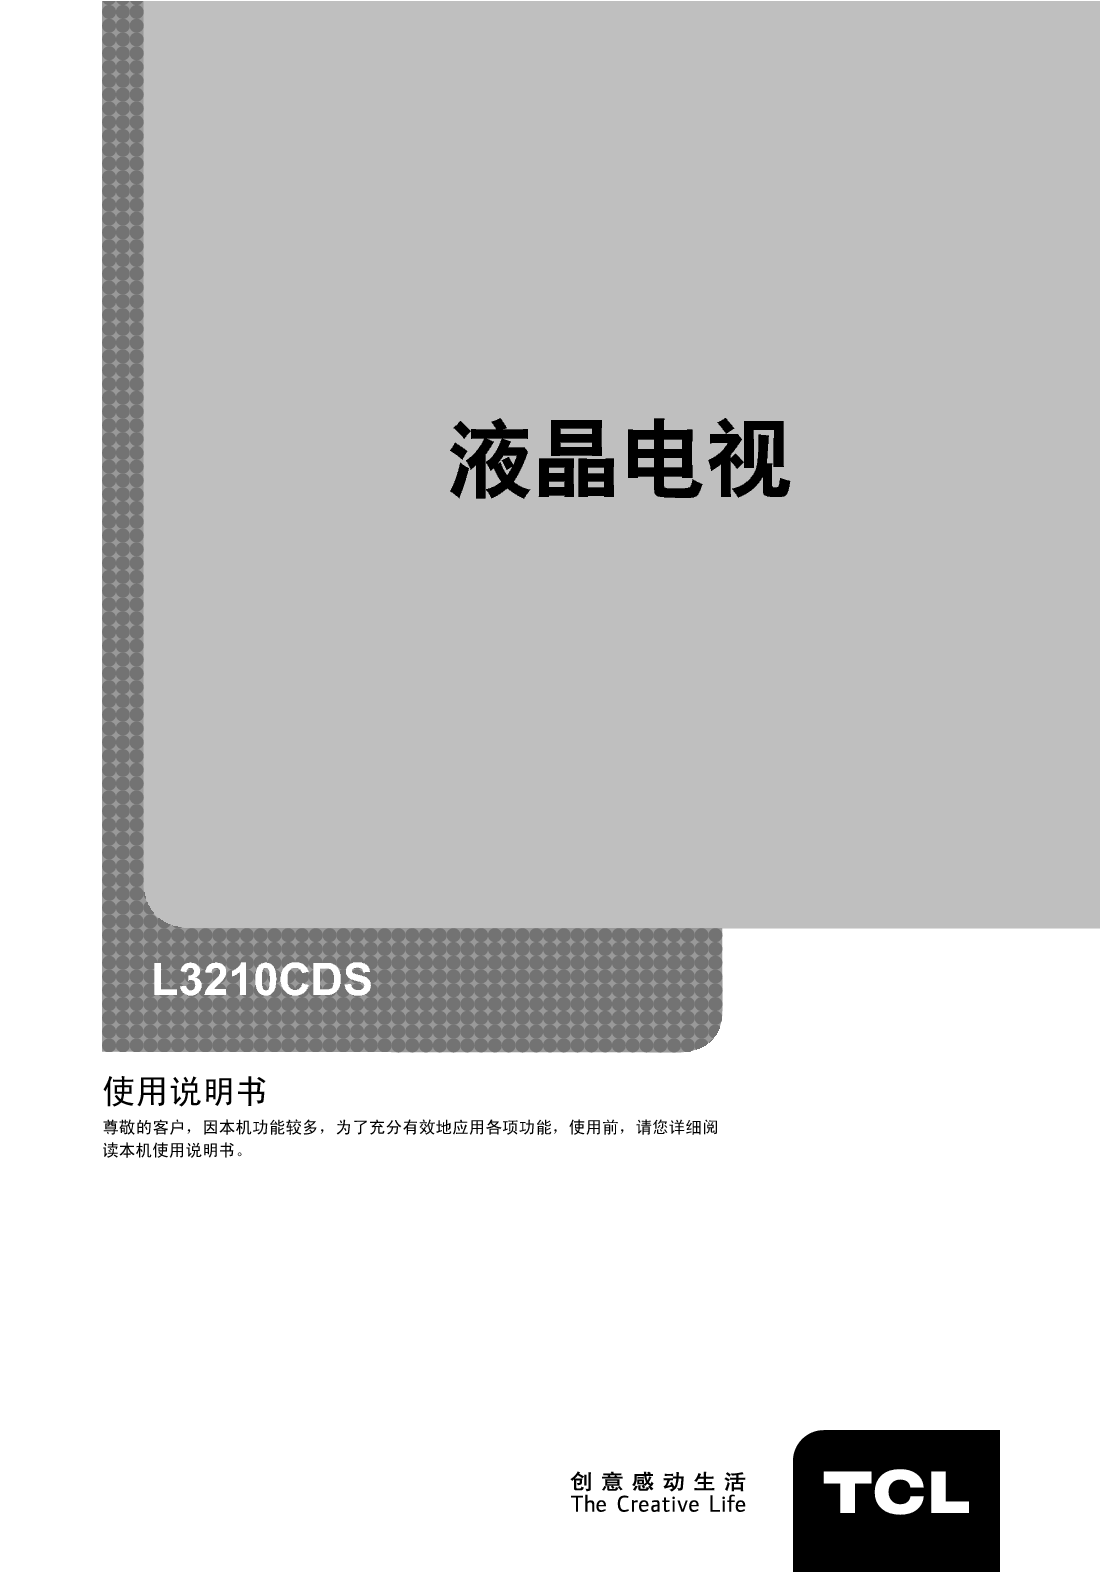 TCL L3210CDS 使用说明书 封面